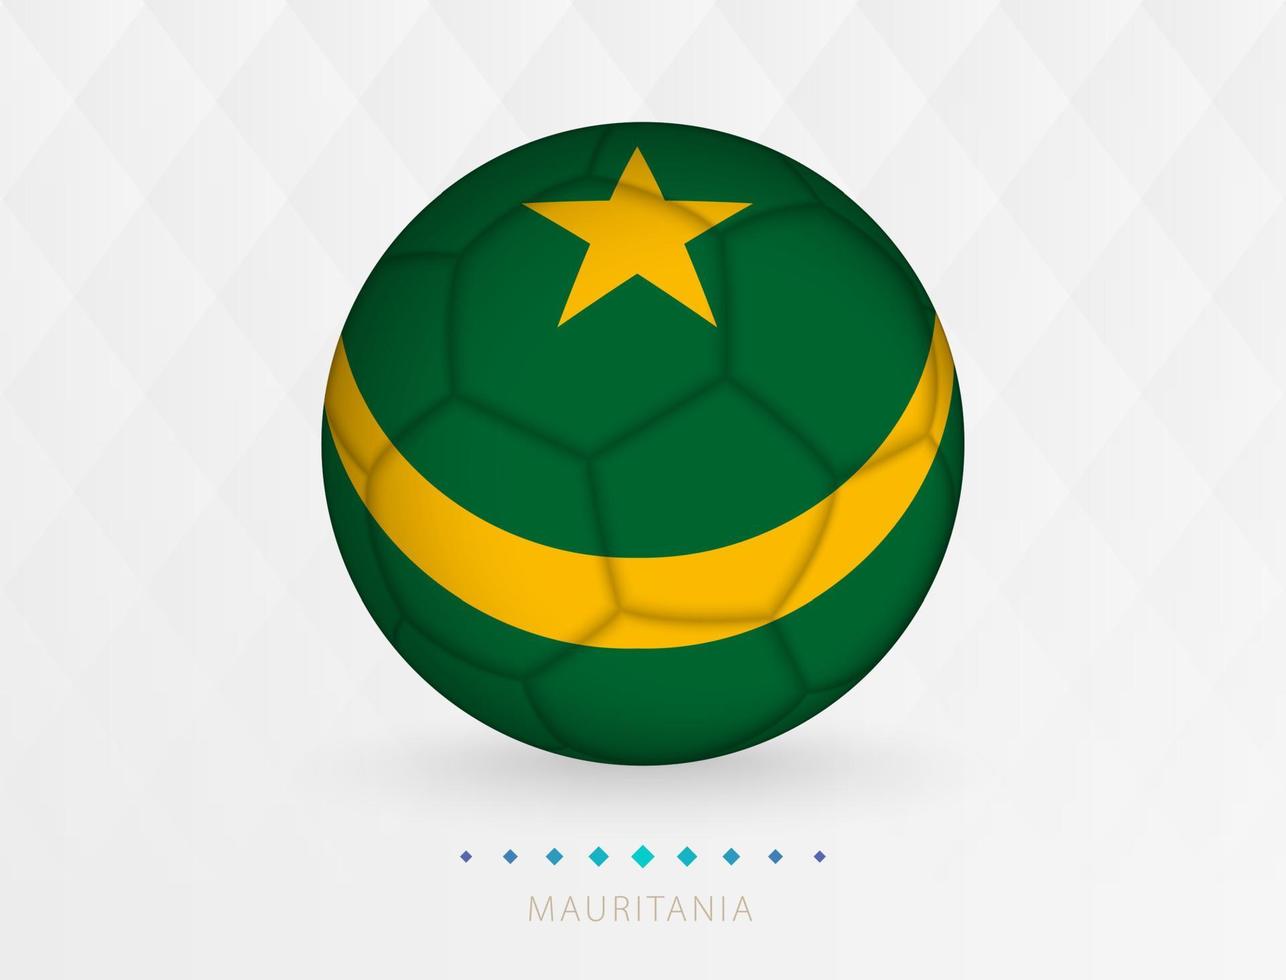 ballon de football avec motif drapeau mauritanie, ballon de football avec drapeau de l'équipe nationale de mauritanie. vecteur